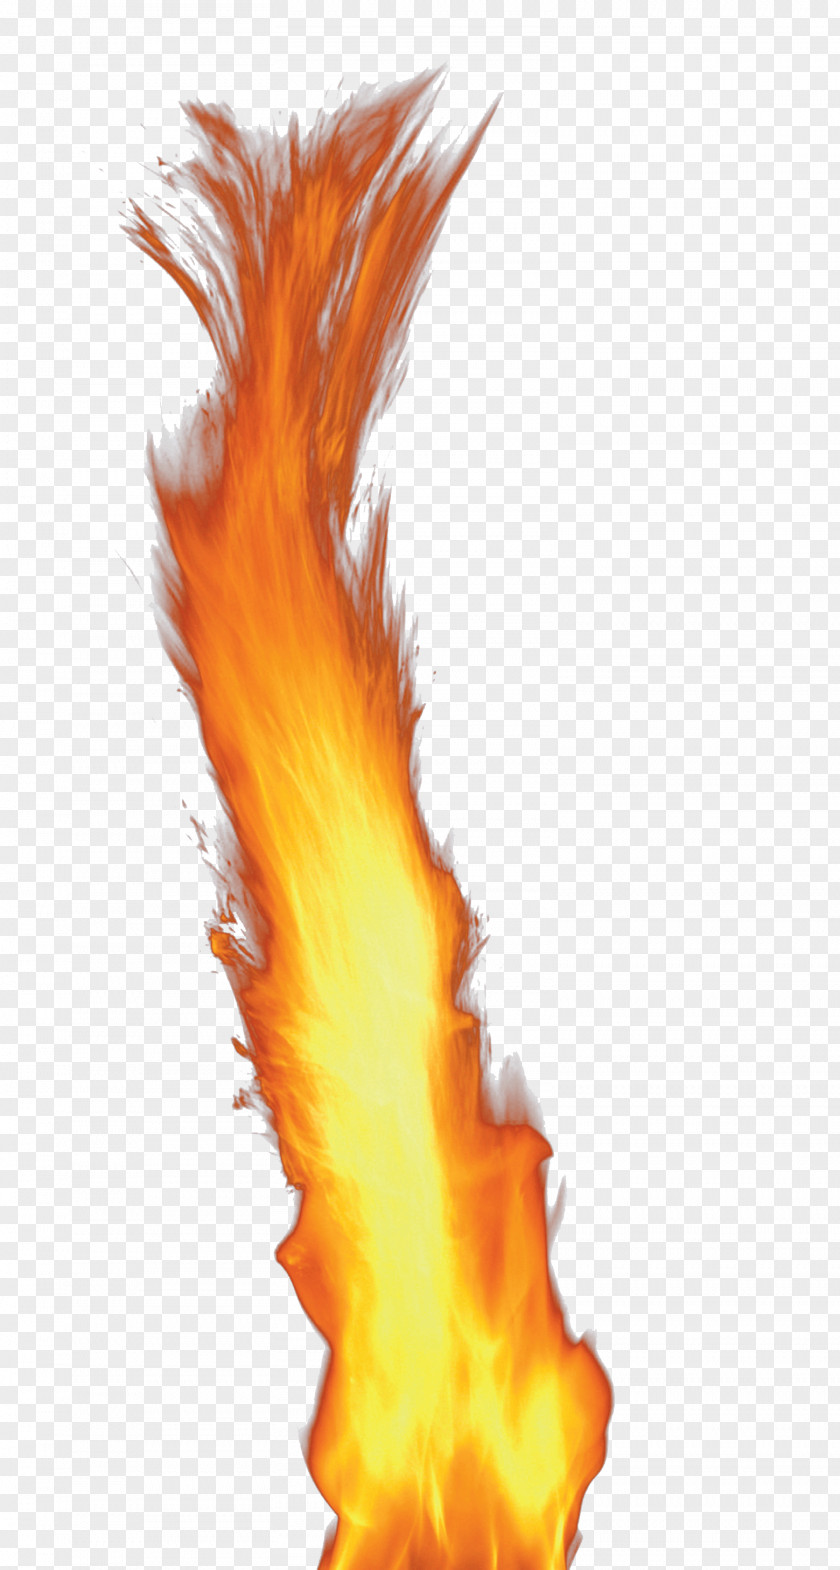 Fire Flame Image Light Clip Art PNG